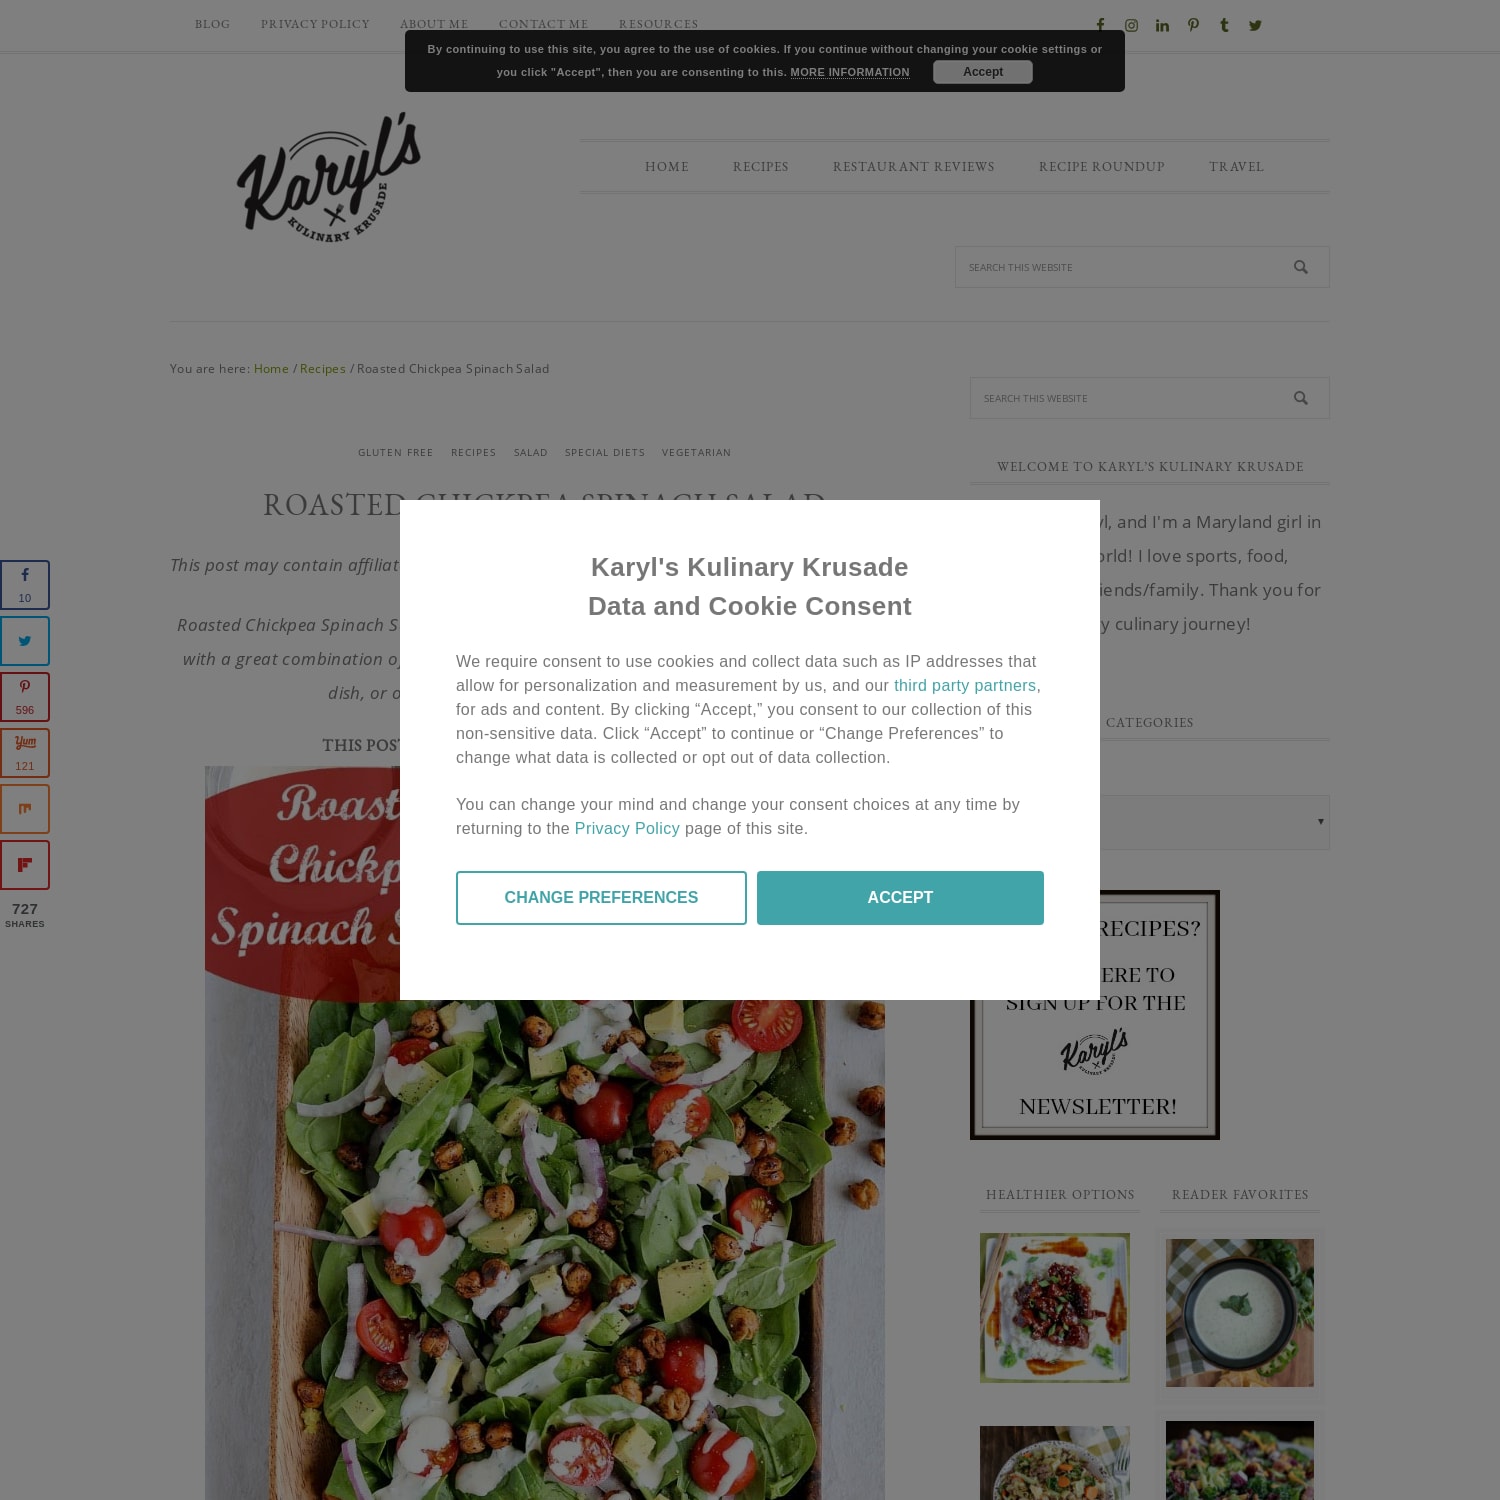 Roasted Chickpea Spinach Salad | Karyl's Kulinary Krusade